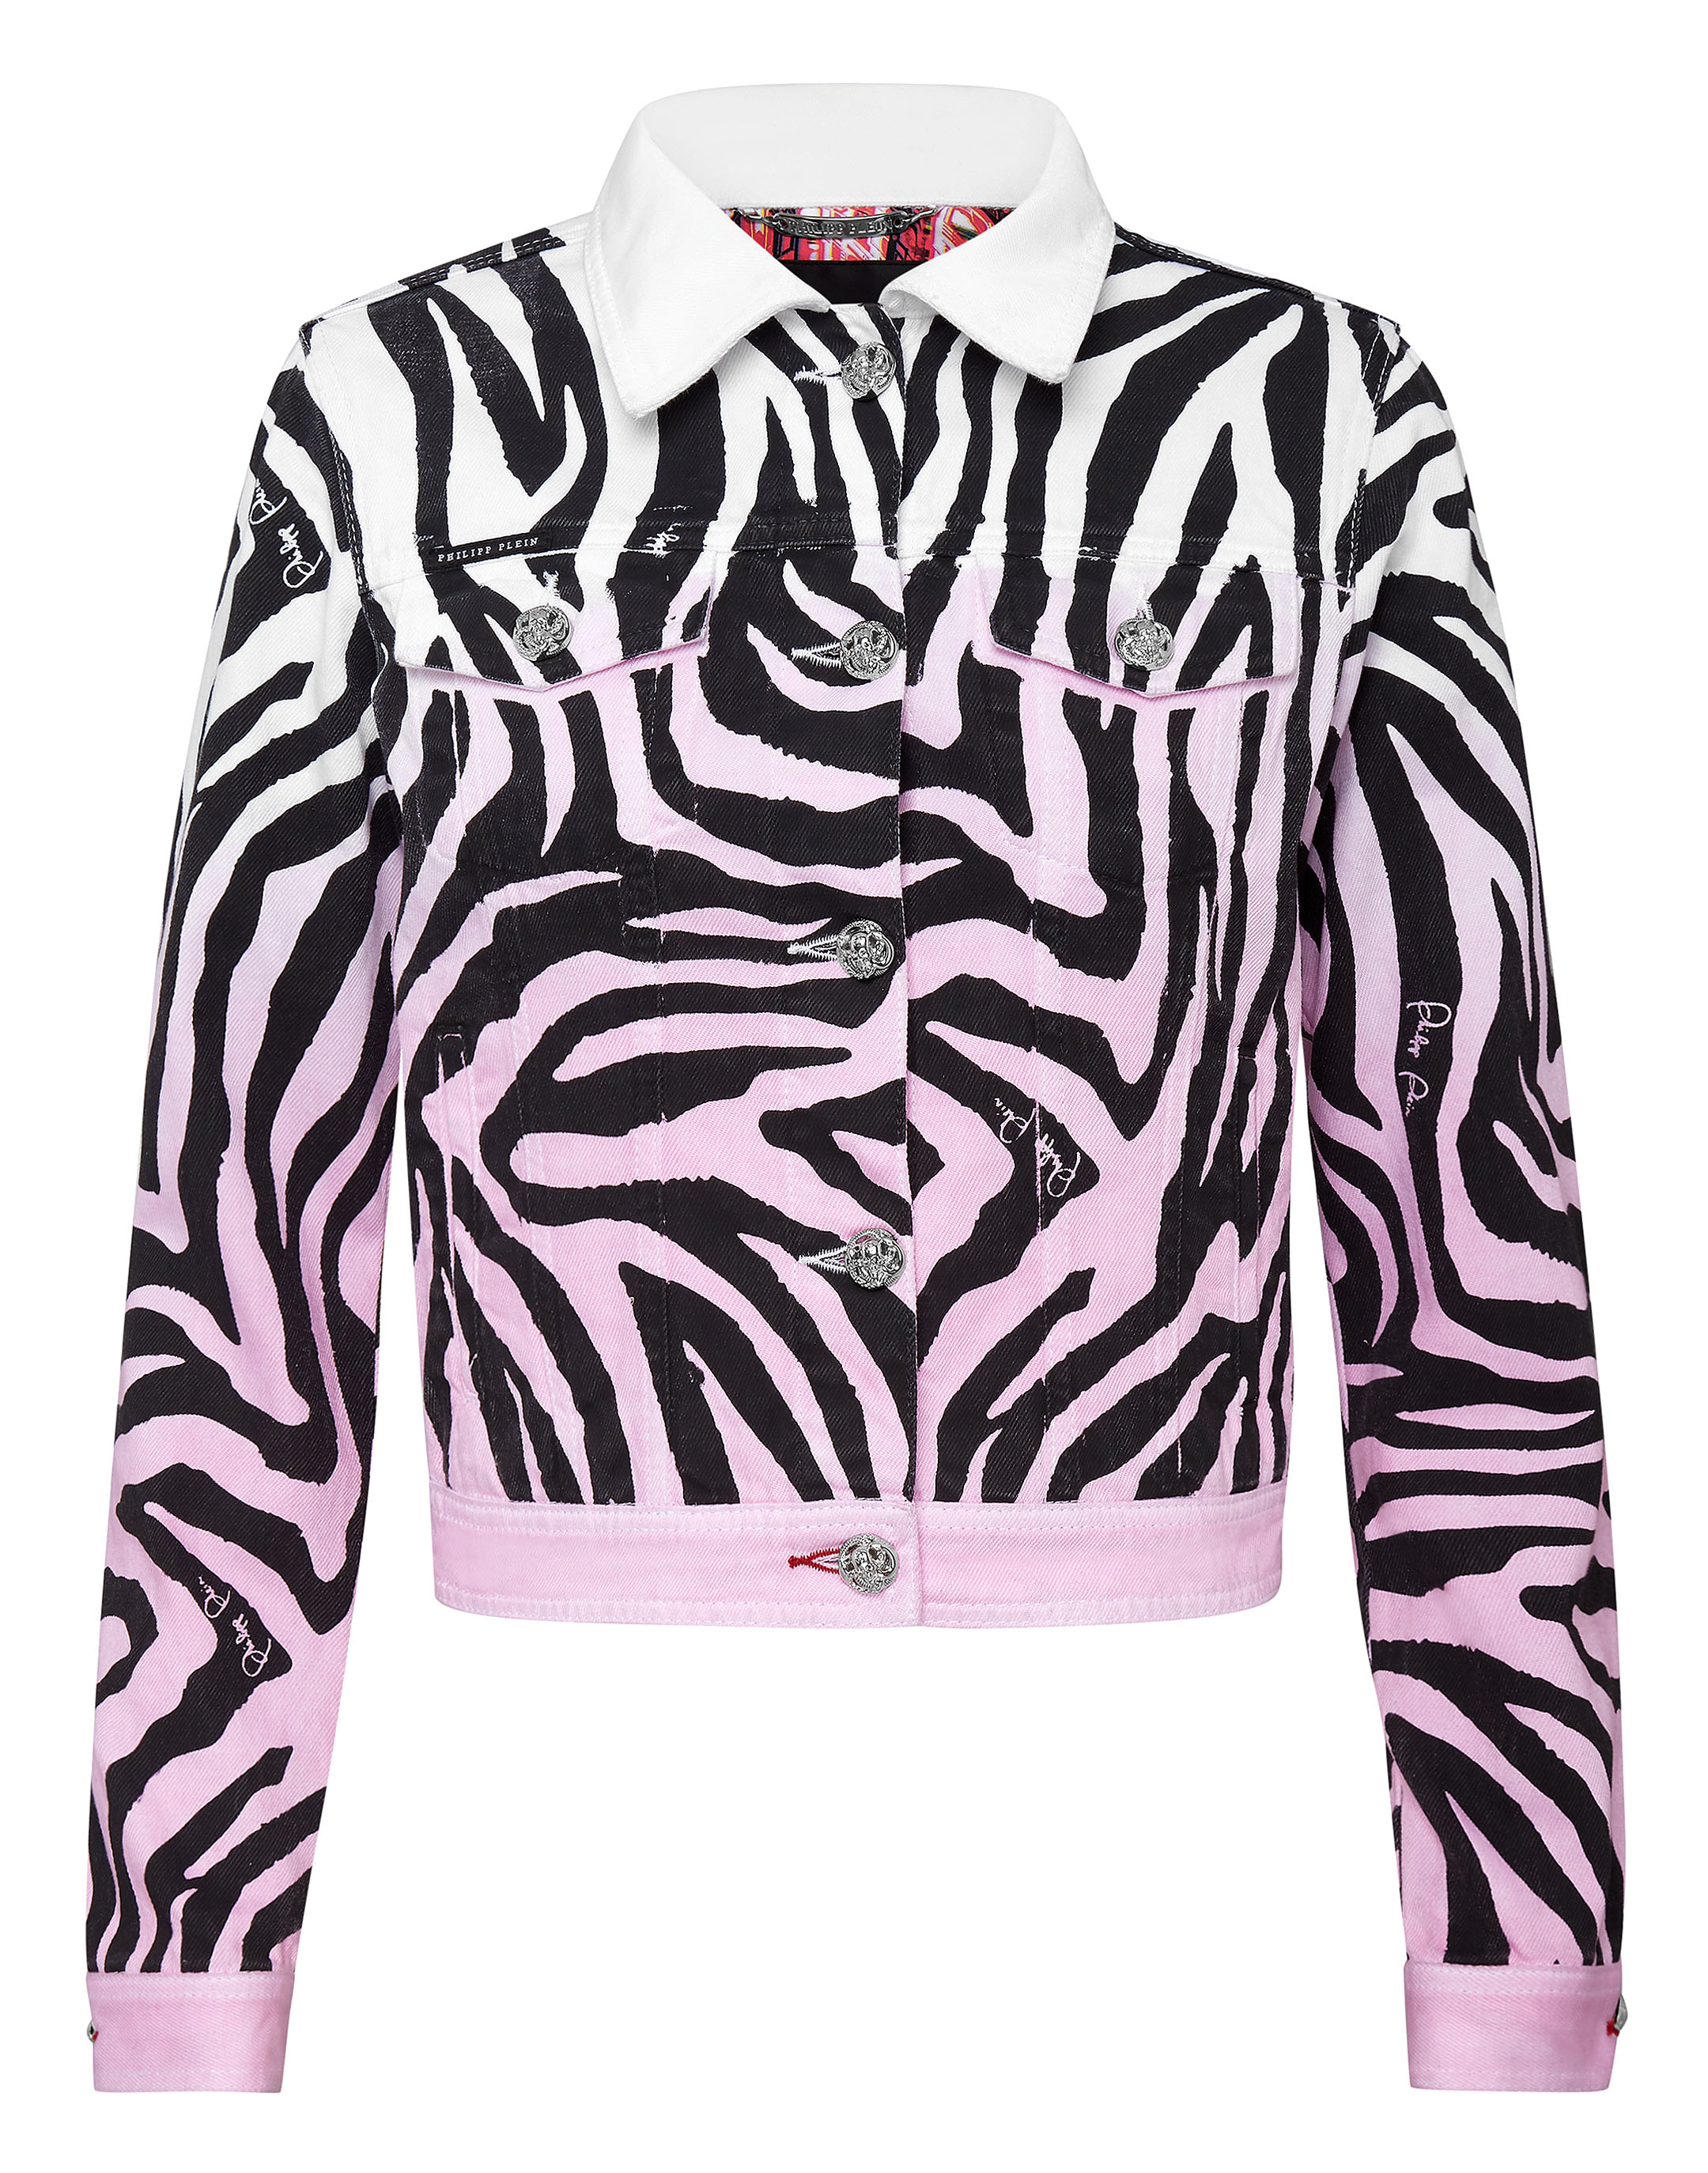 Denim Jacket Zebra